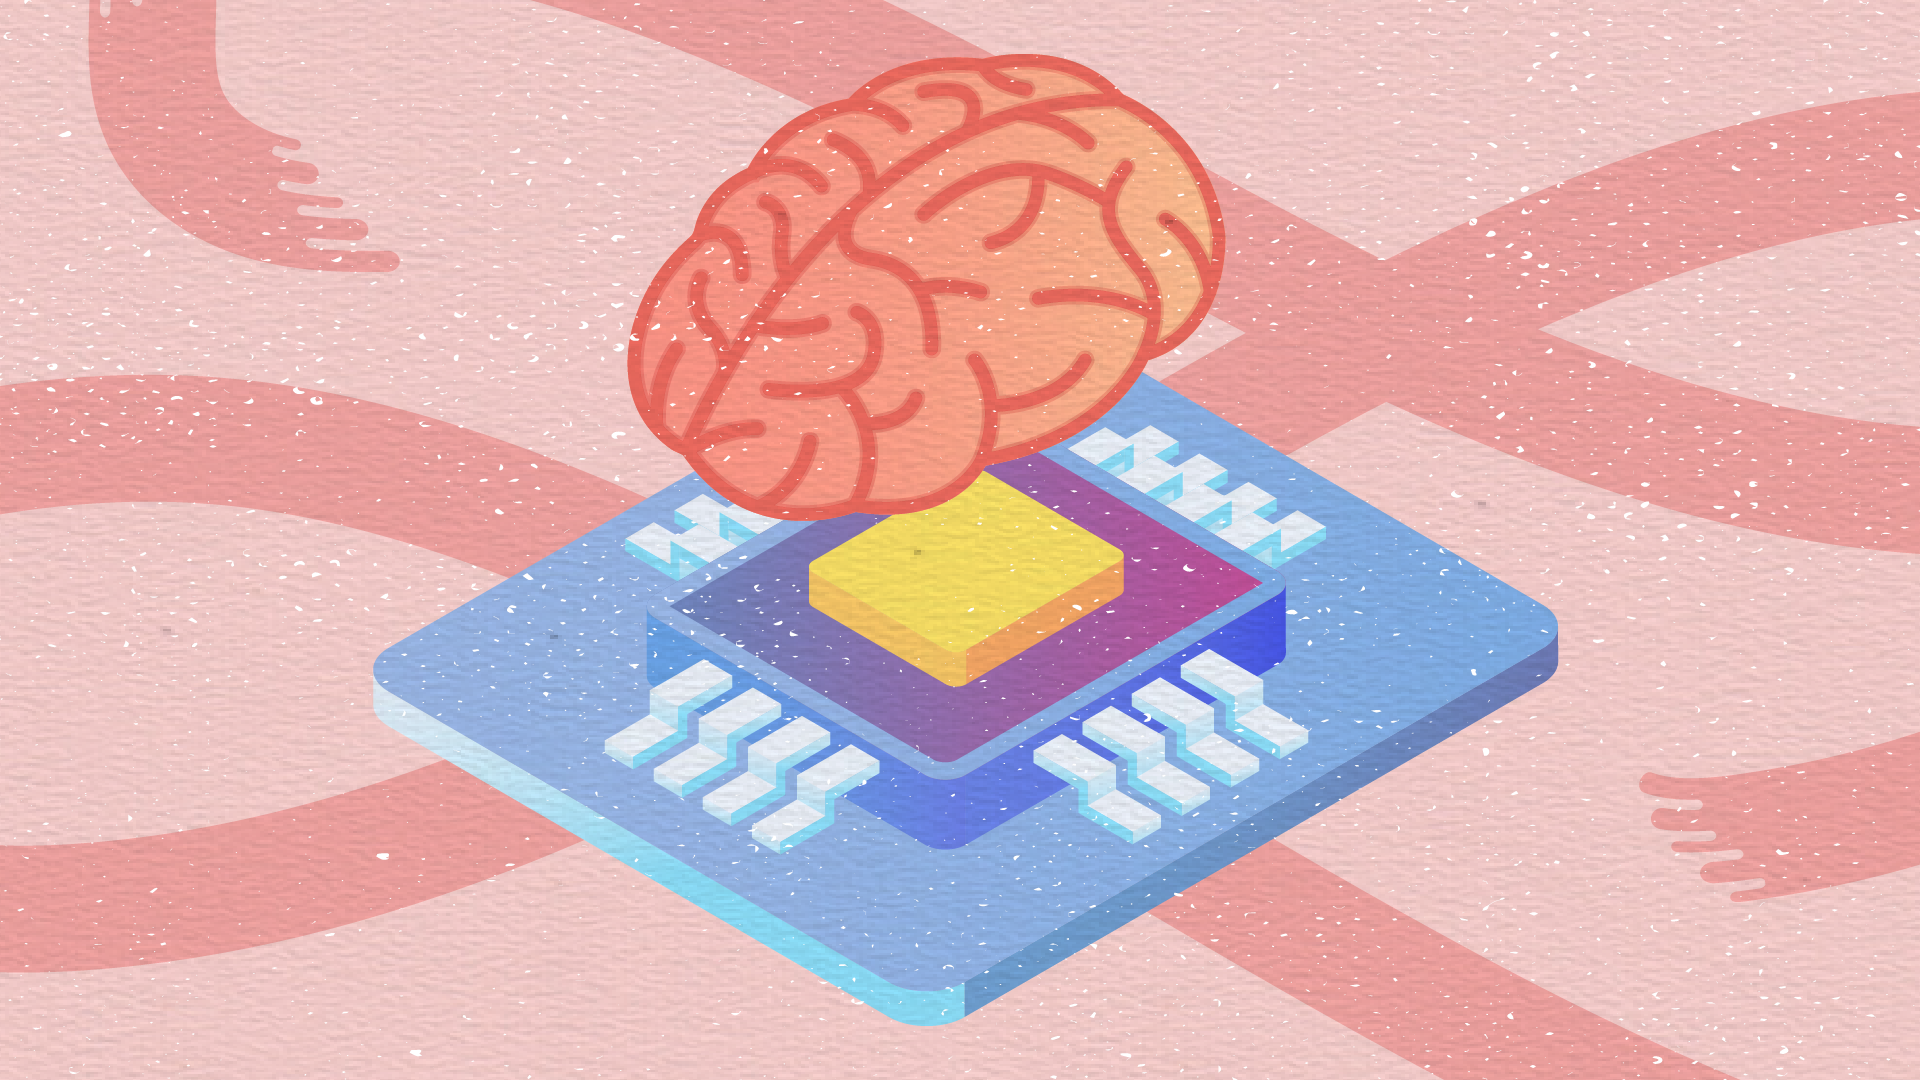 brain computer interface